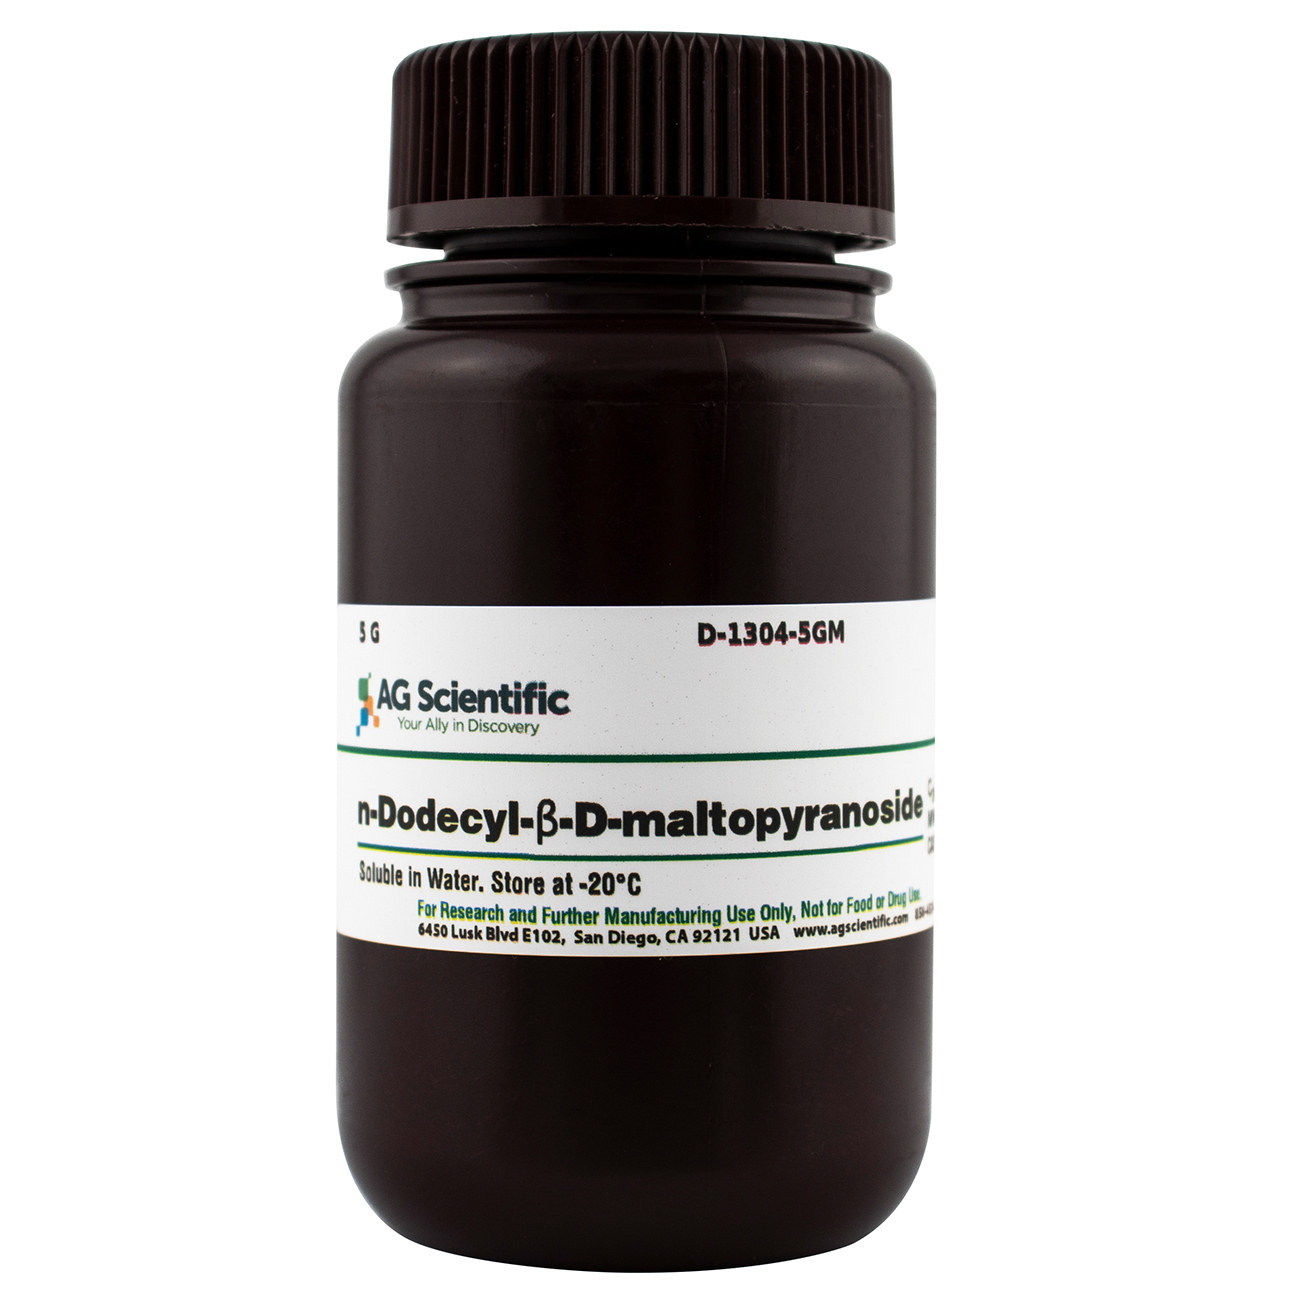 Dodecyl-beta-D-maltopyranoside